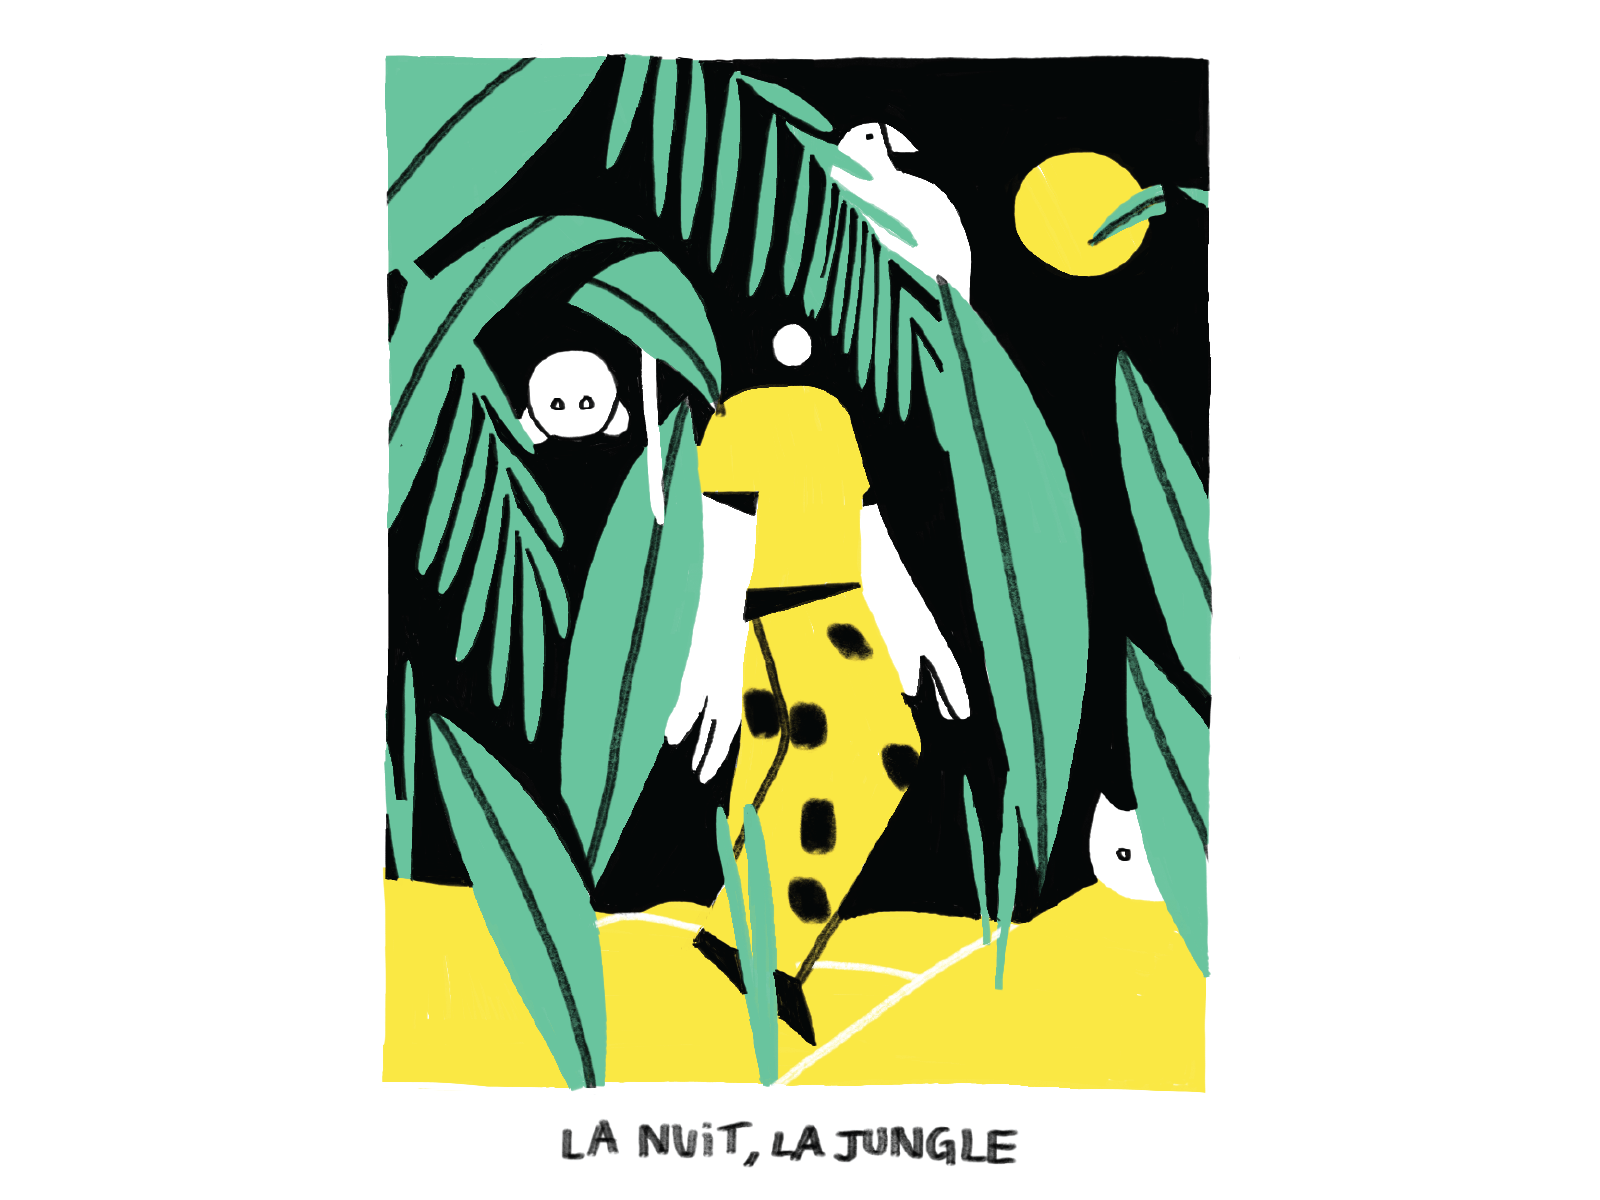 La nuit, la jungle ai character illustration illustrator plant